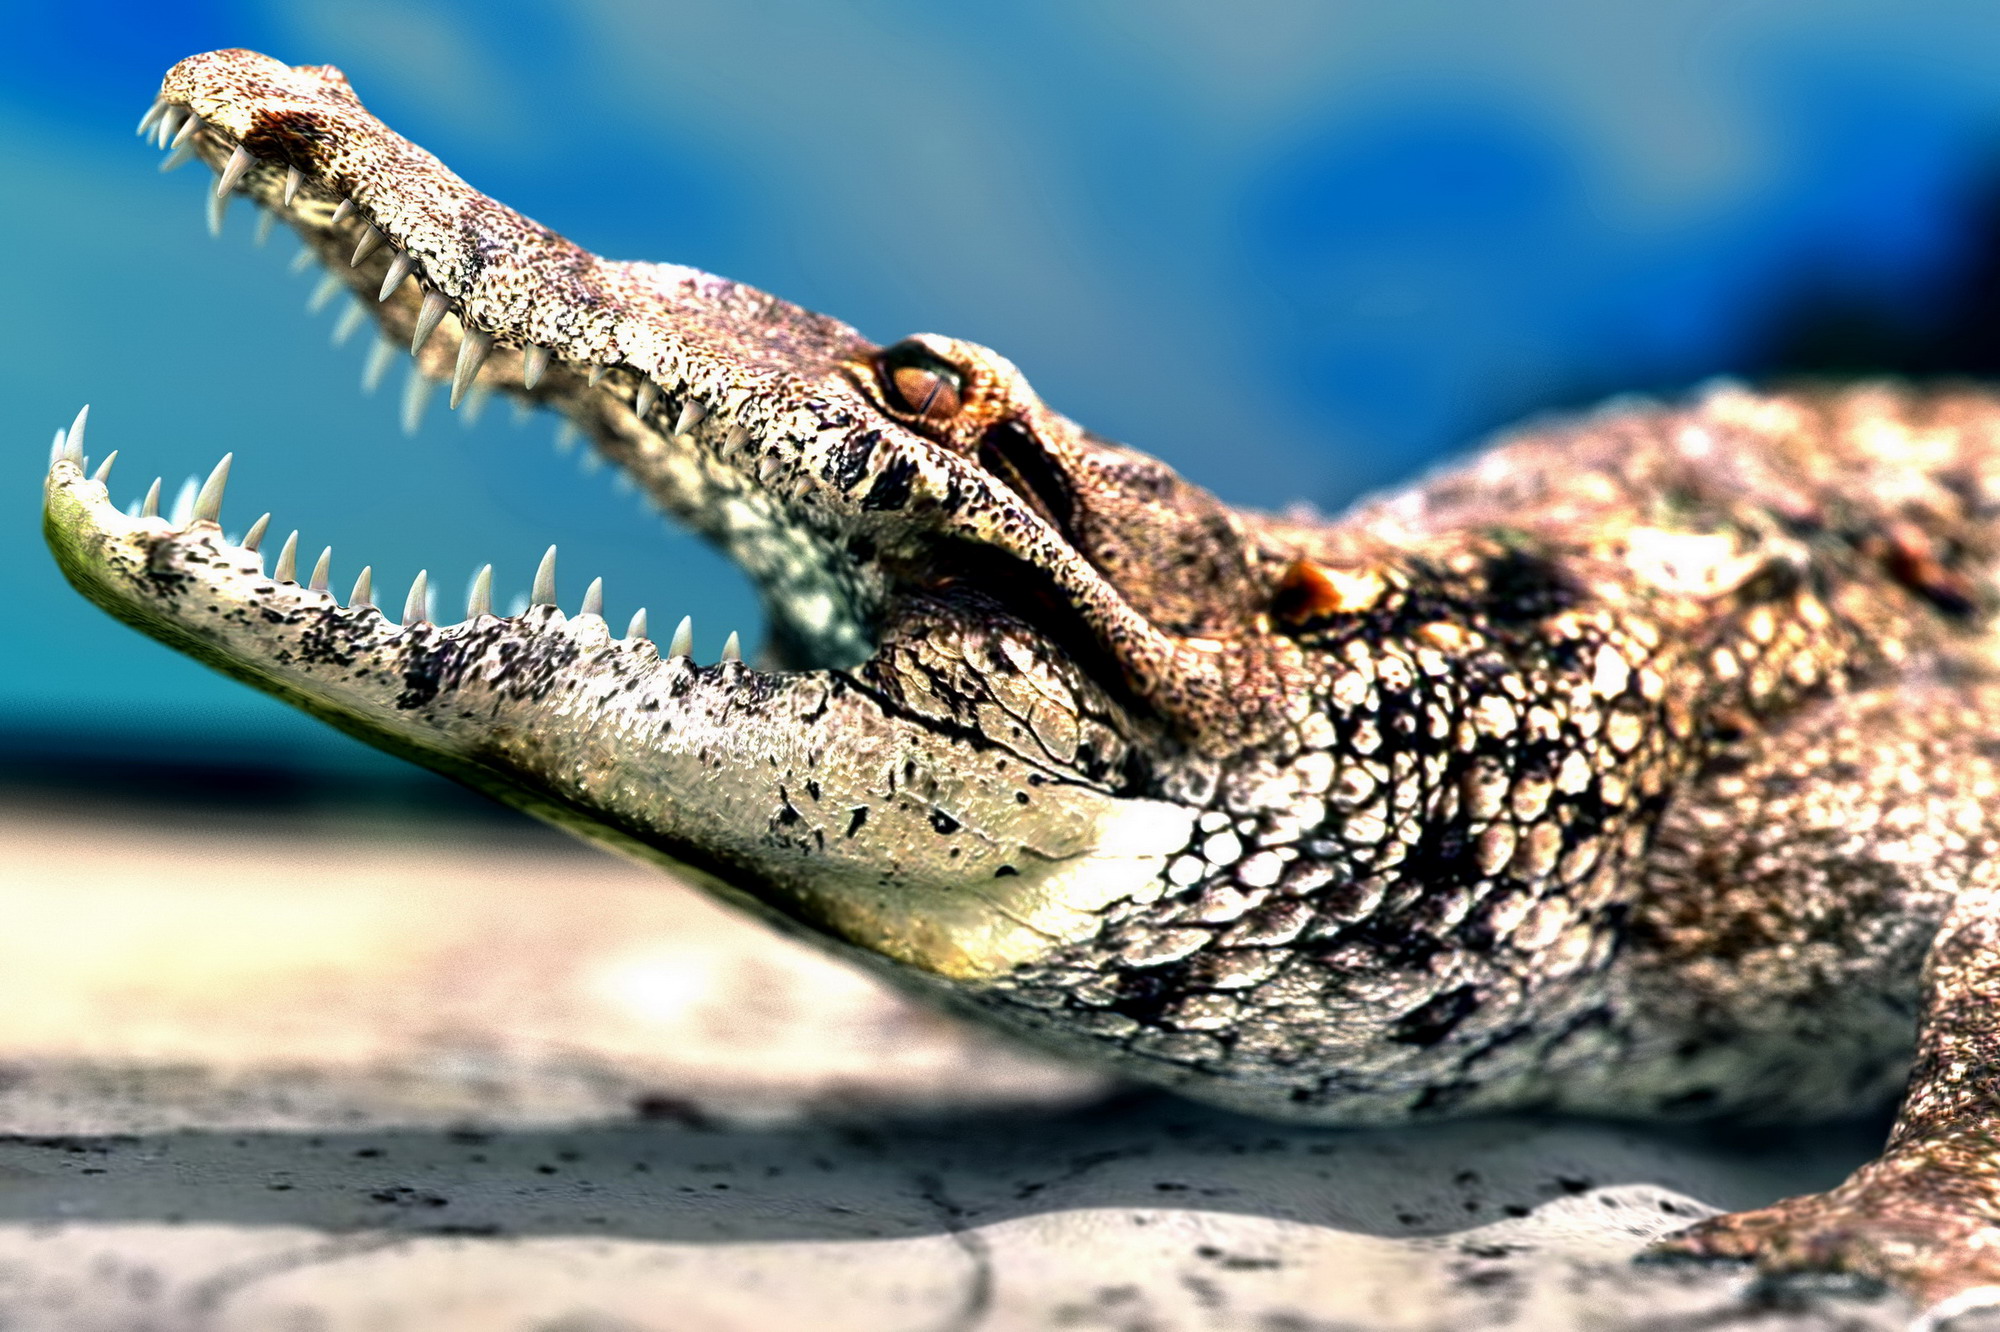 alligators, reptiles - desktop wallpaper